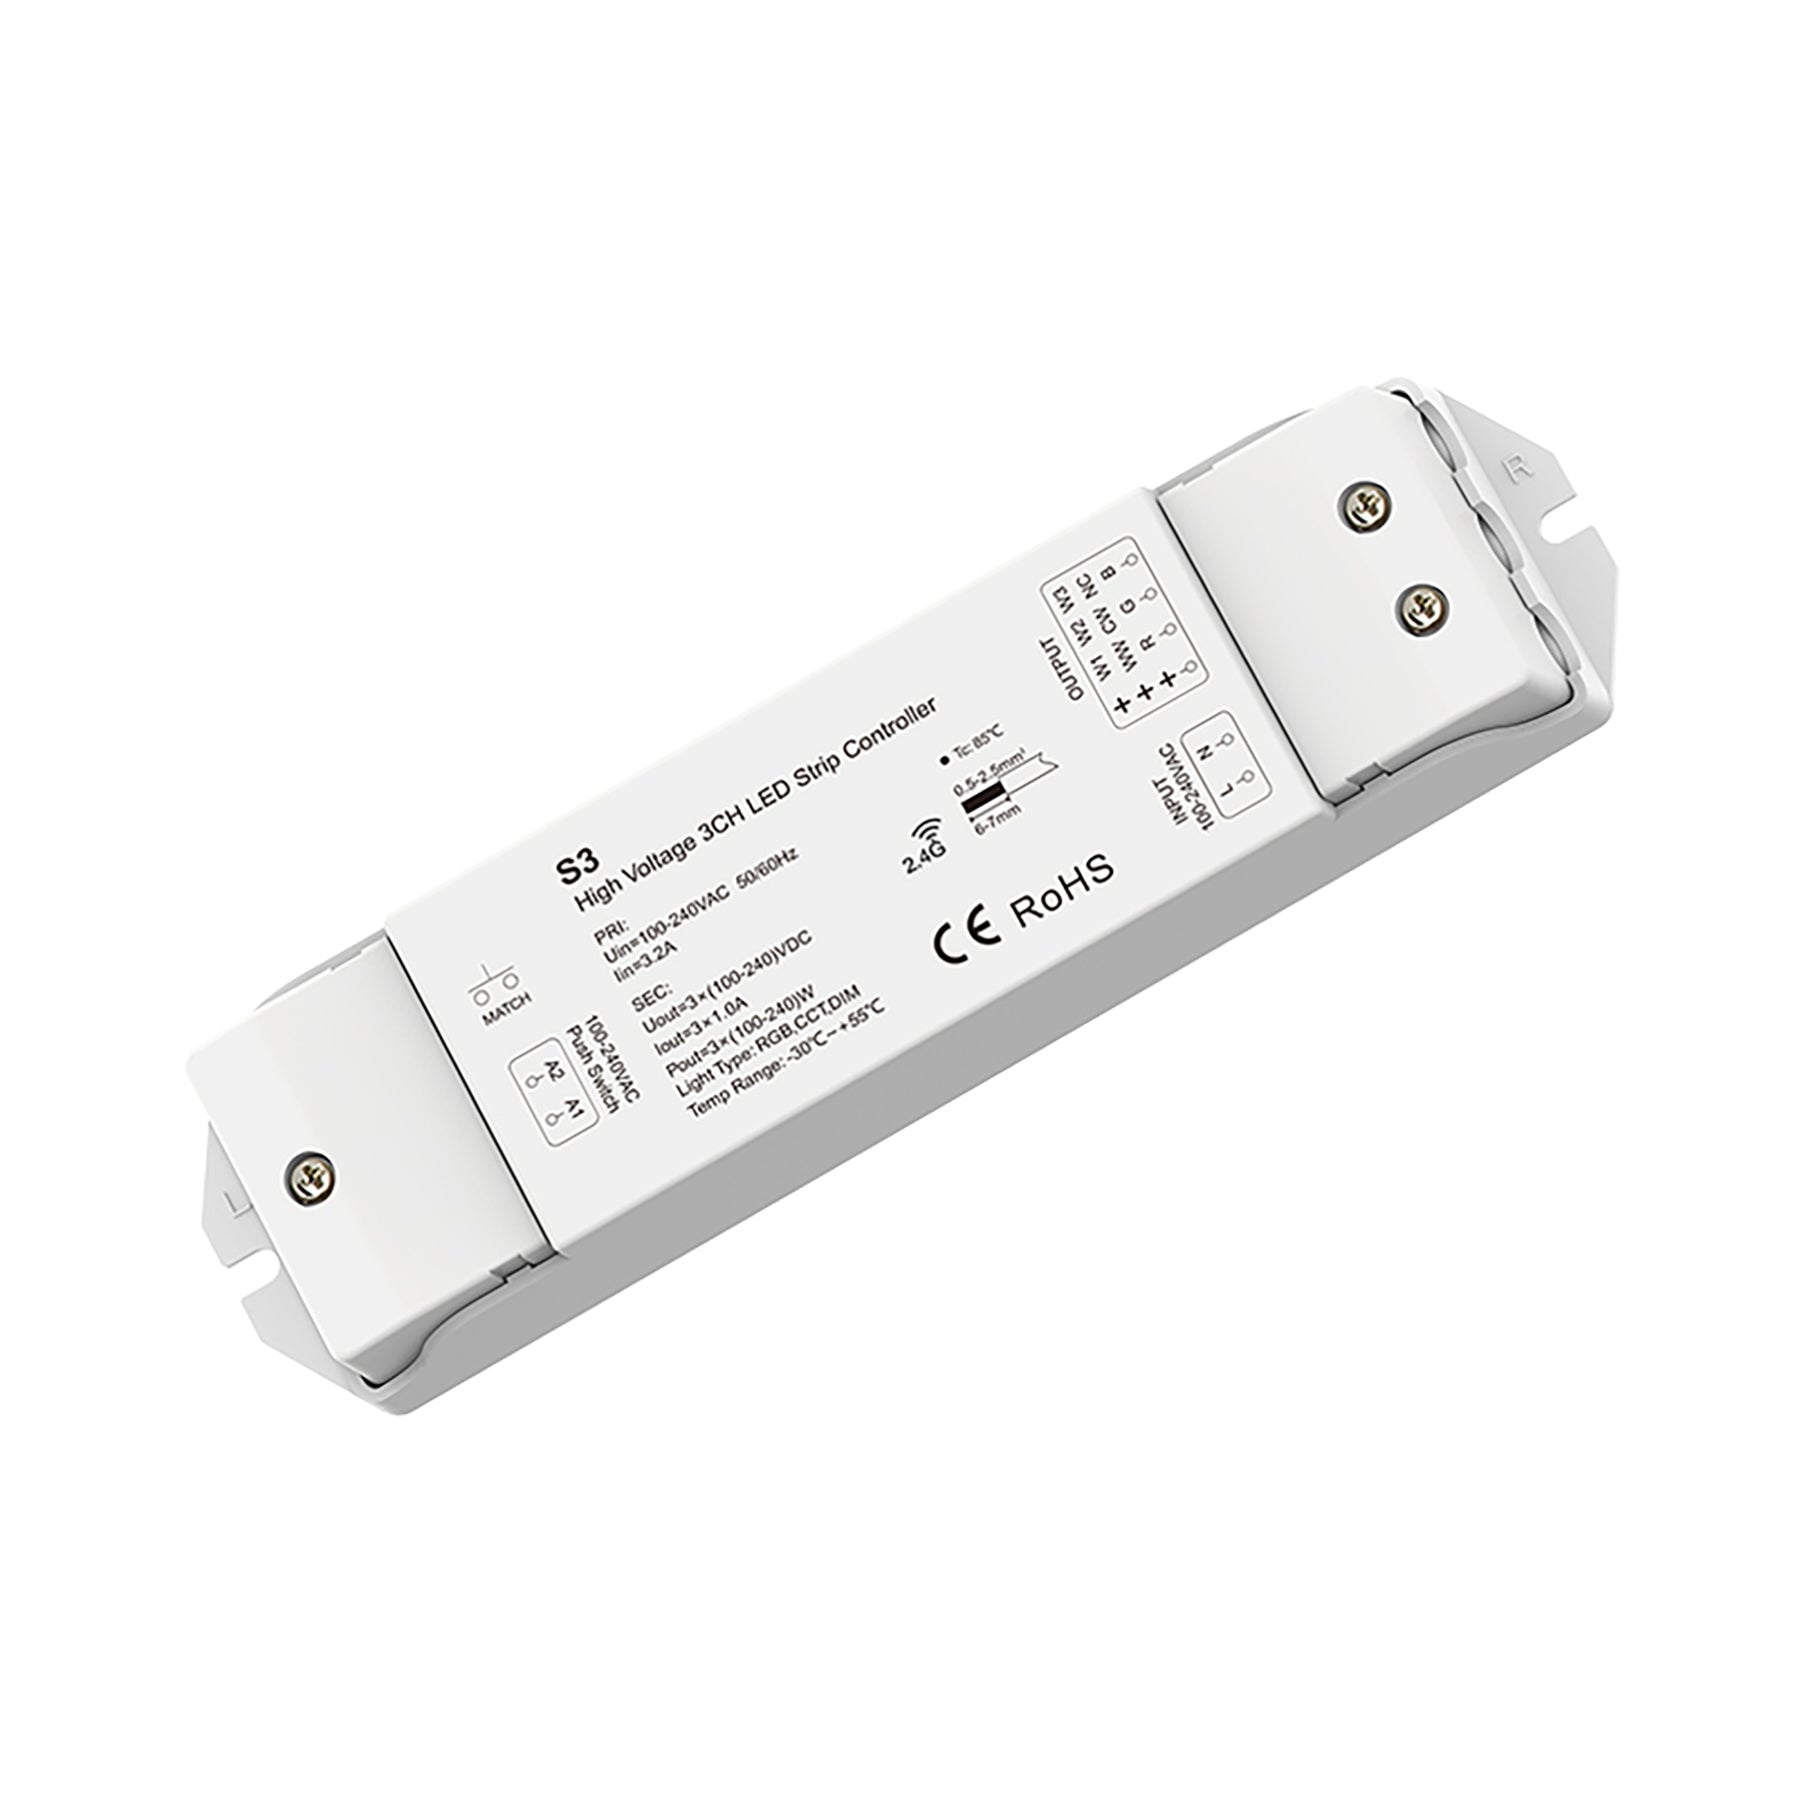 G.W.S. LED LED 100-240V AC RGB/RGBW Controller S3 + 4 Zone Remote Control RT9